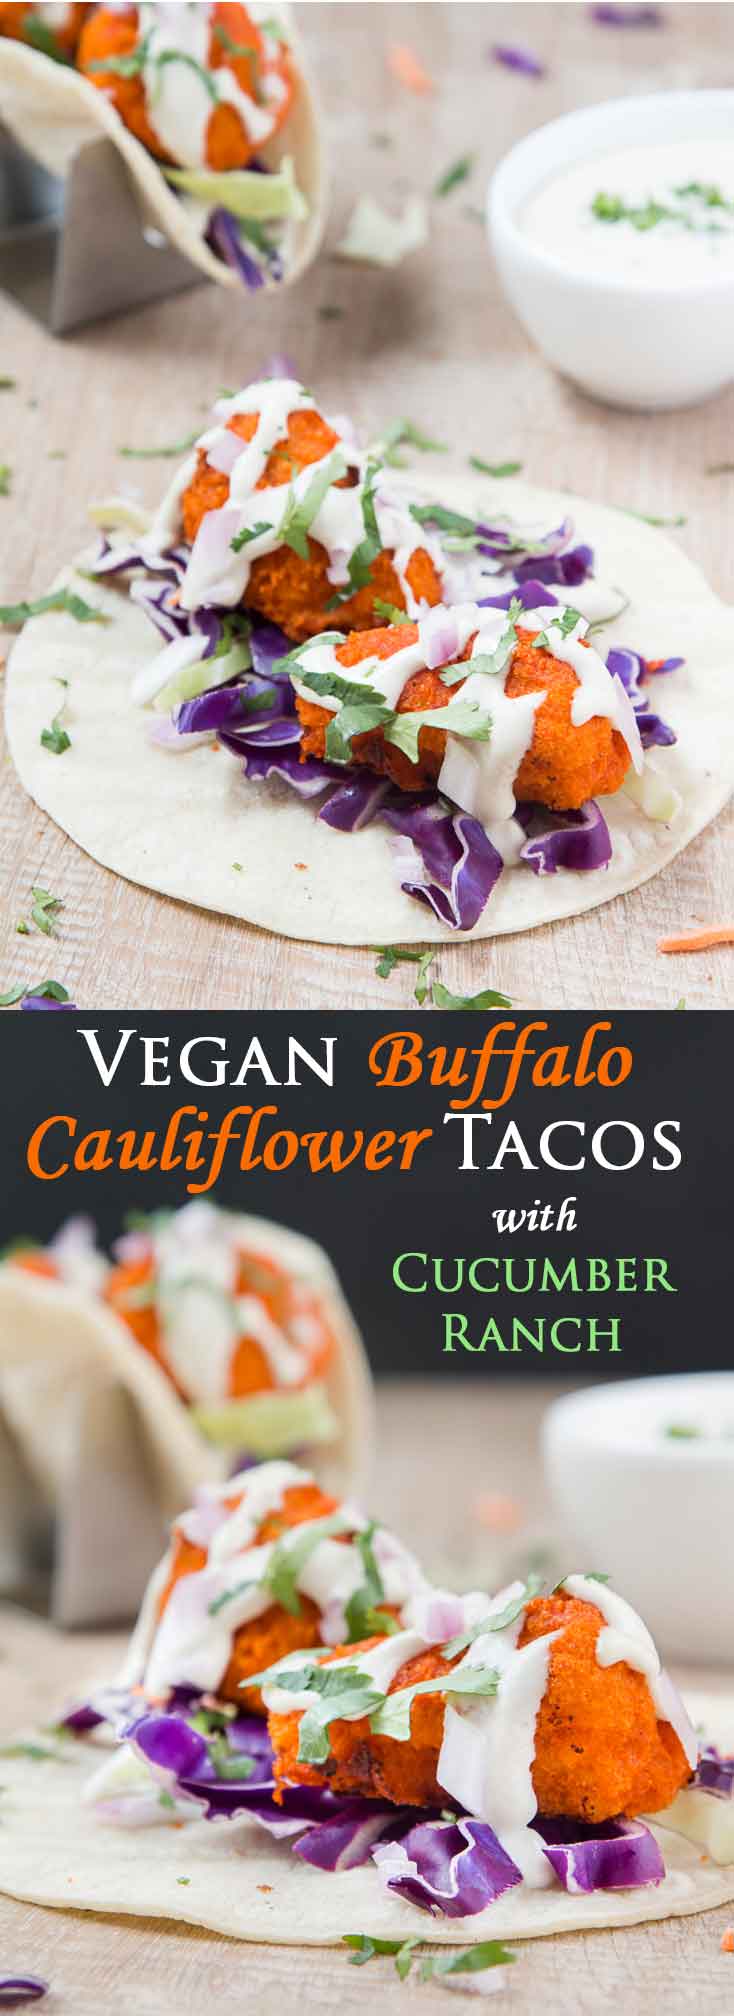 Vegan Buffalo Cauliflower Tacos with Cucumber Ranch #vegan #glutenfree | www.VegetarianGastronomy.com